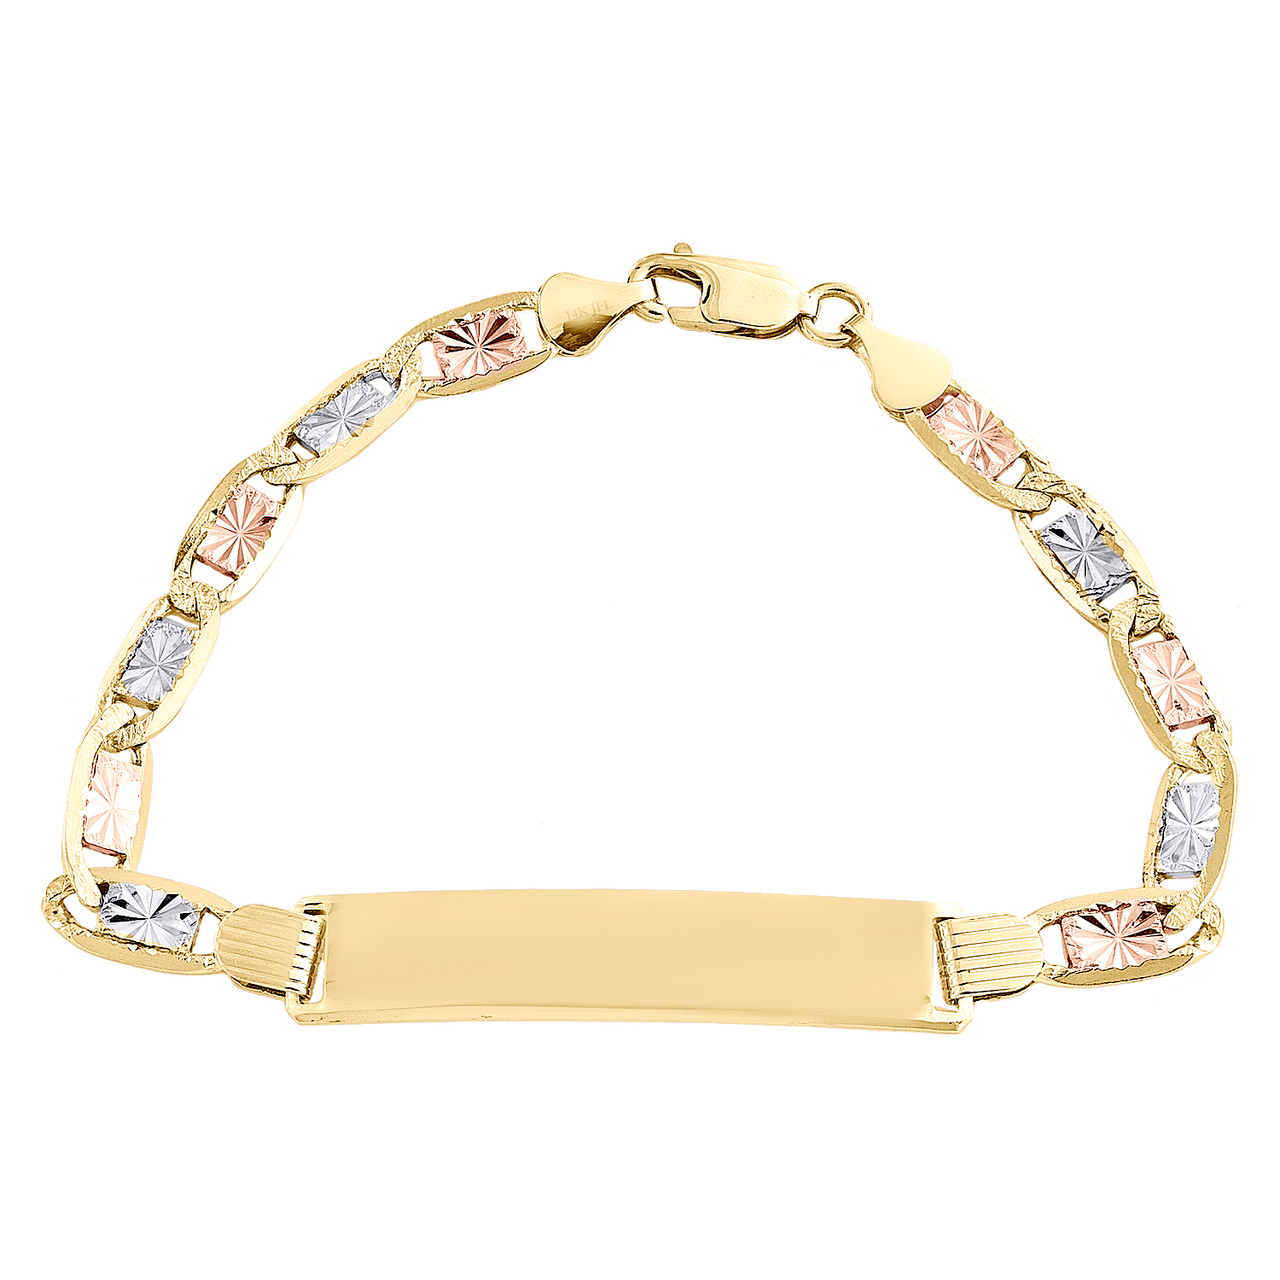 Keti Sorely Designs Gold Monogram Bracelet 1.25 inch / 6 1/2 inch / 24K Gold Plated